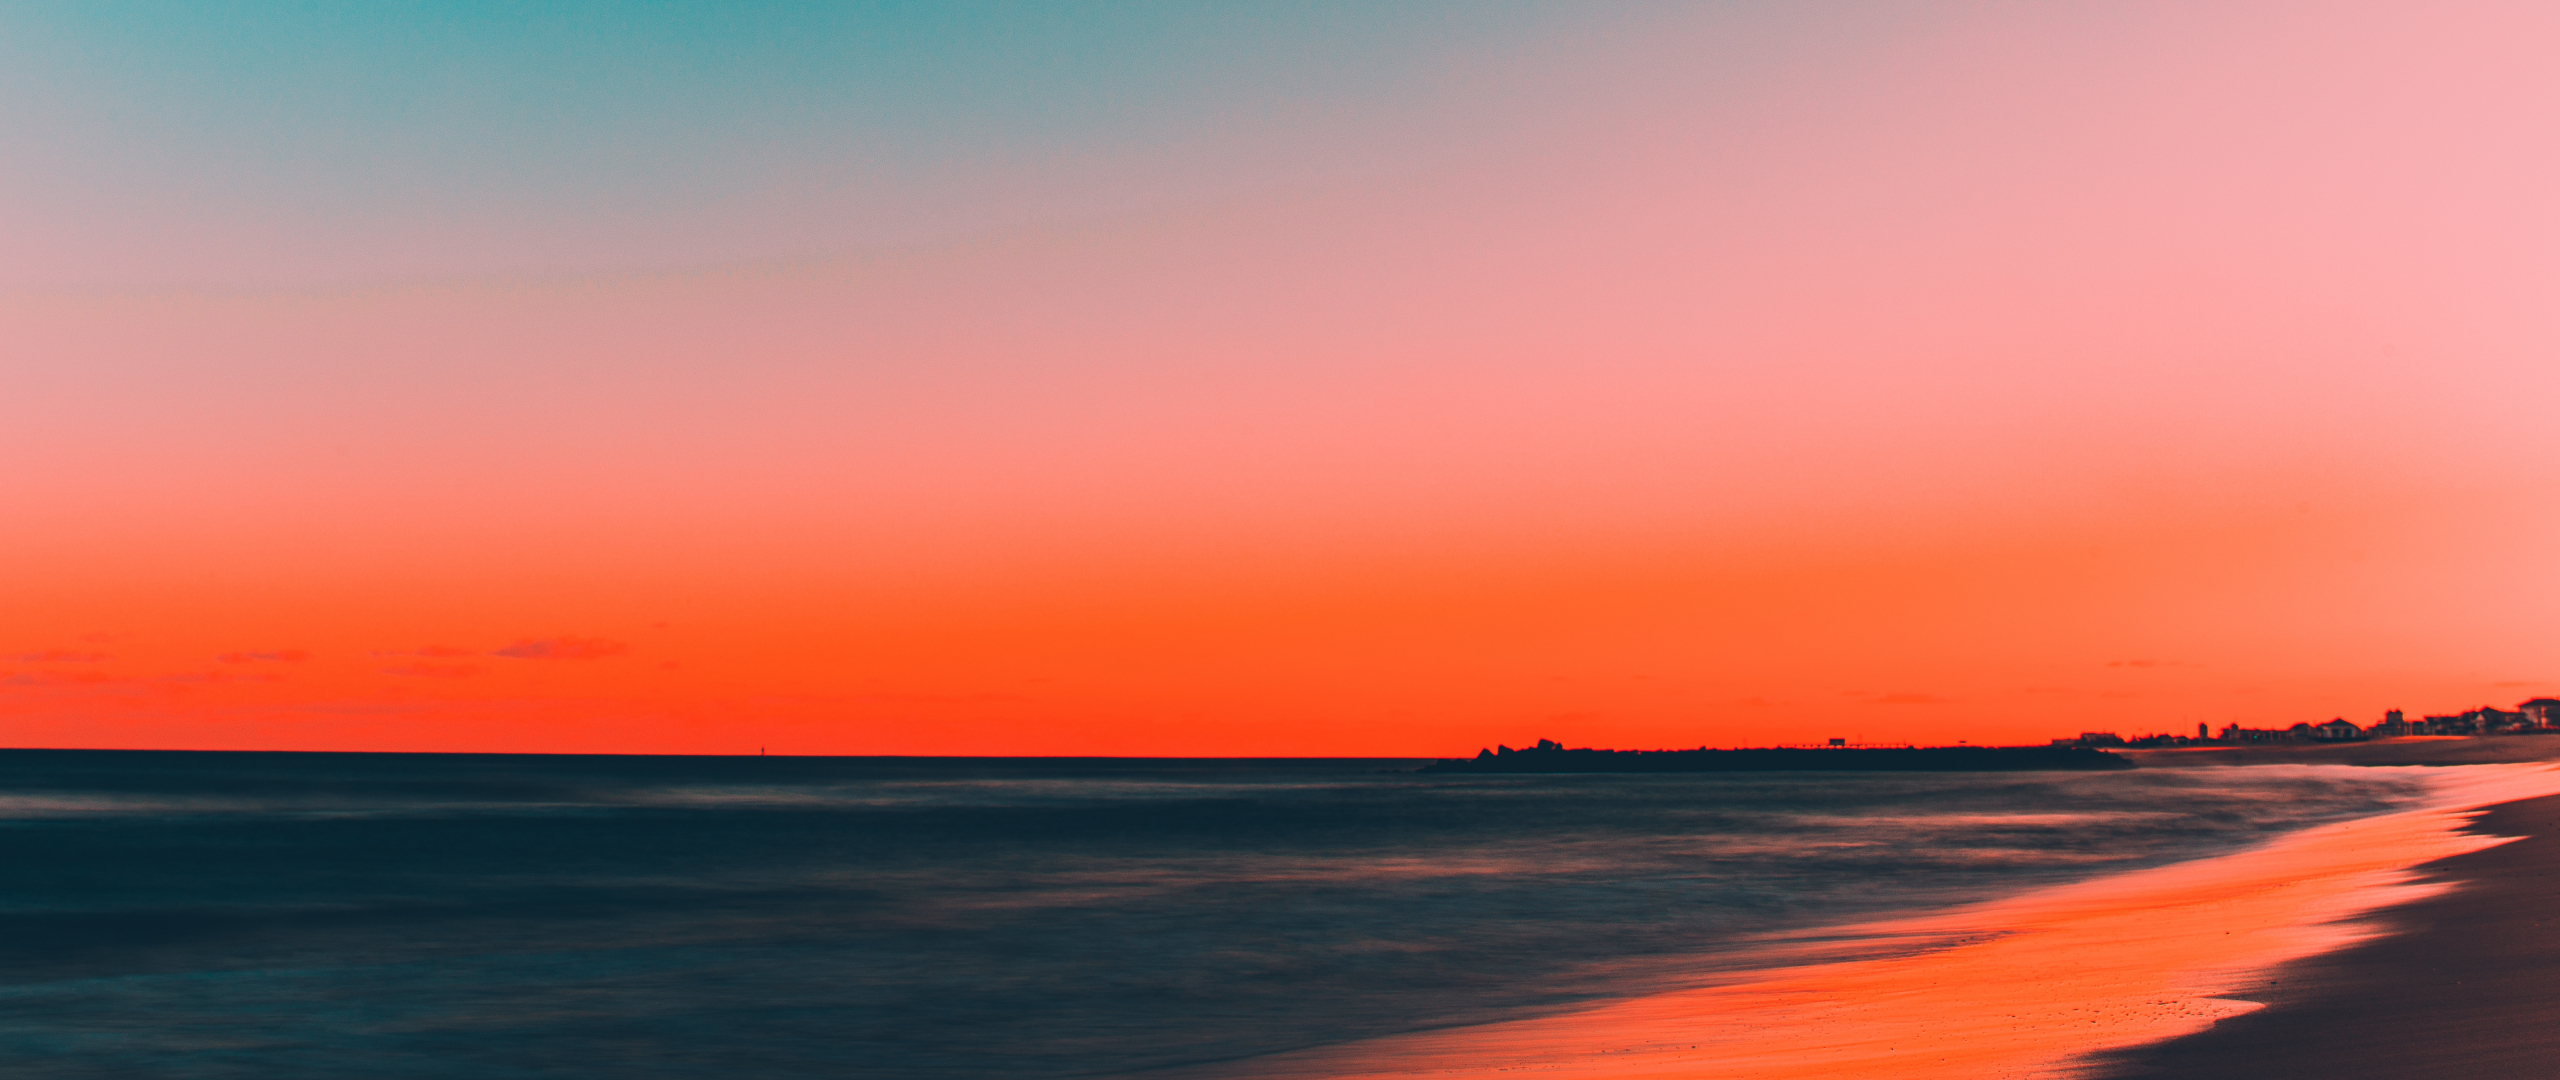 Download beach, clean sky, skyline, sunset 2560x1080 wallpaper, dual ...